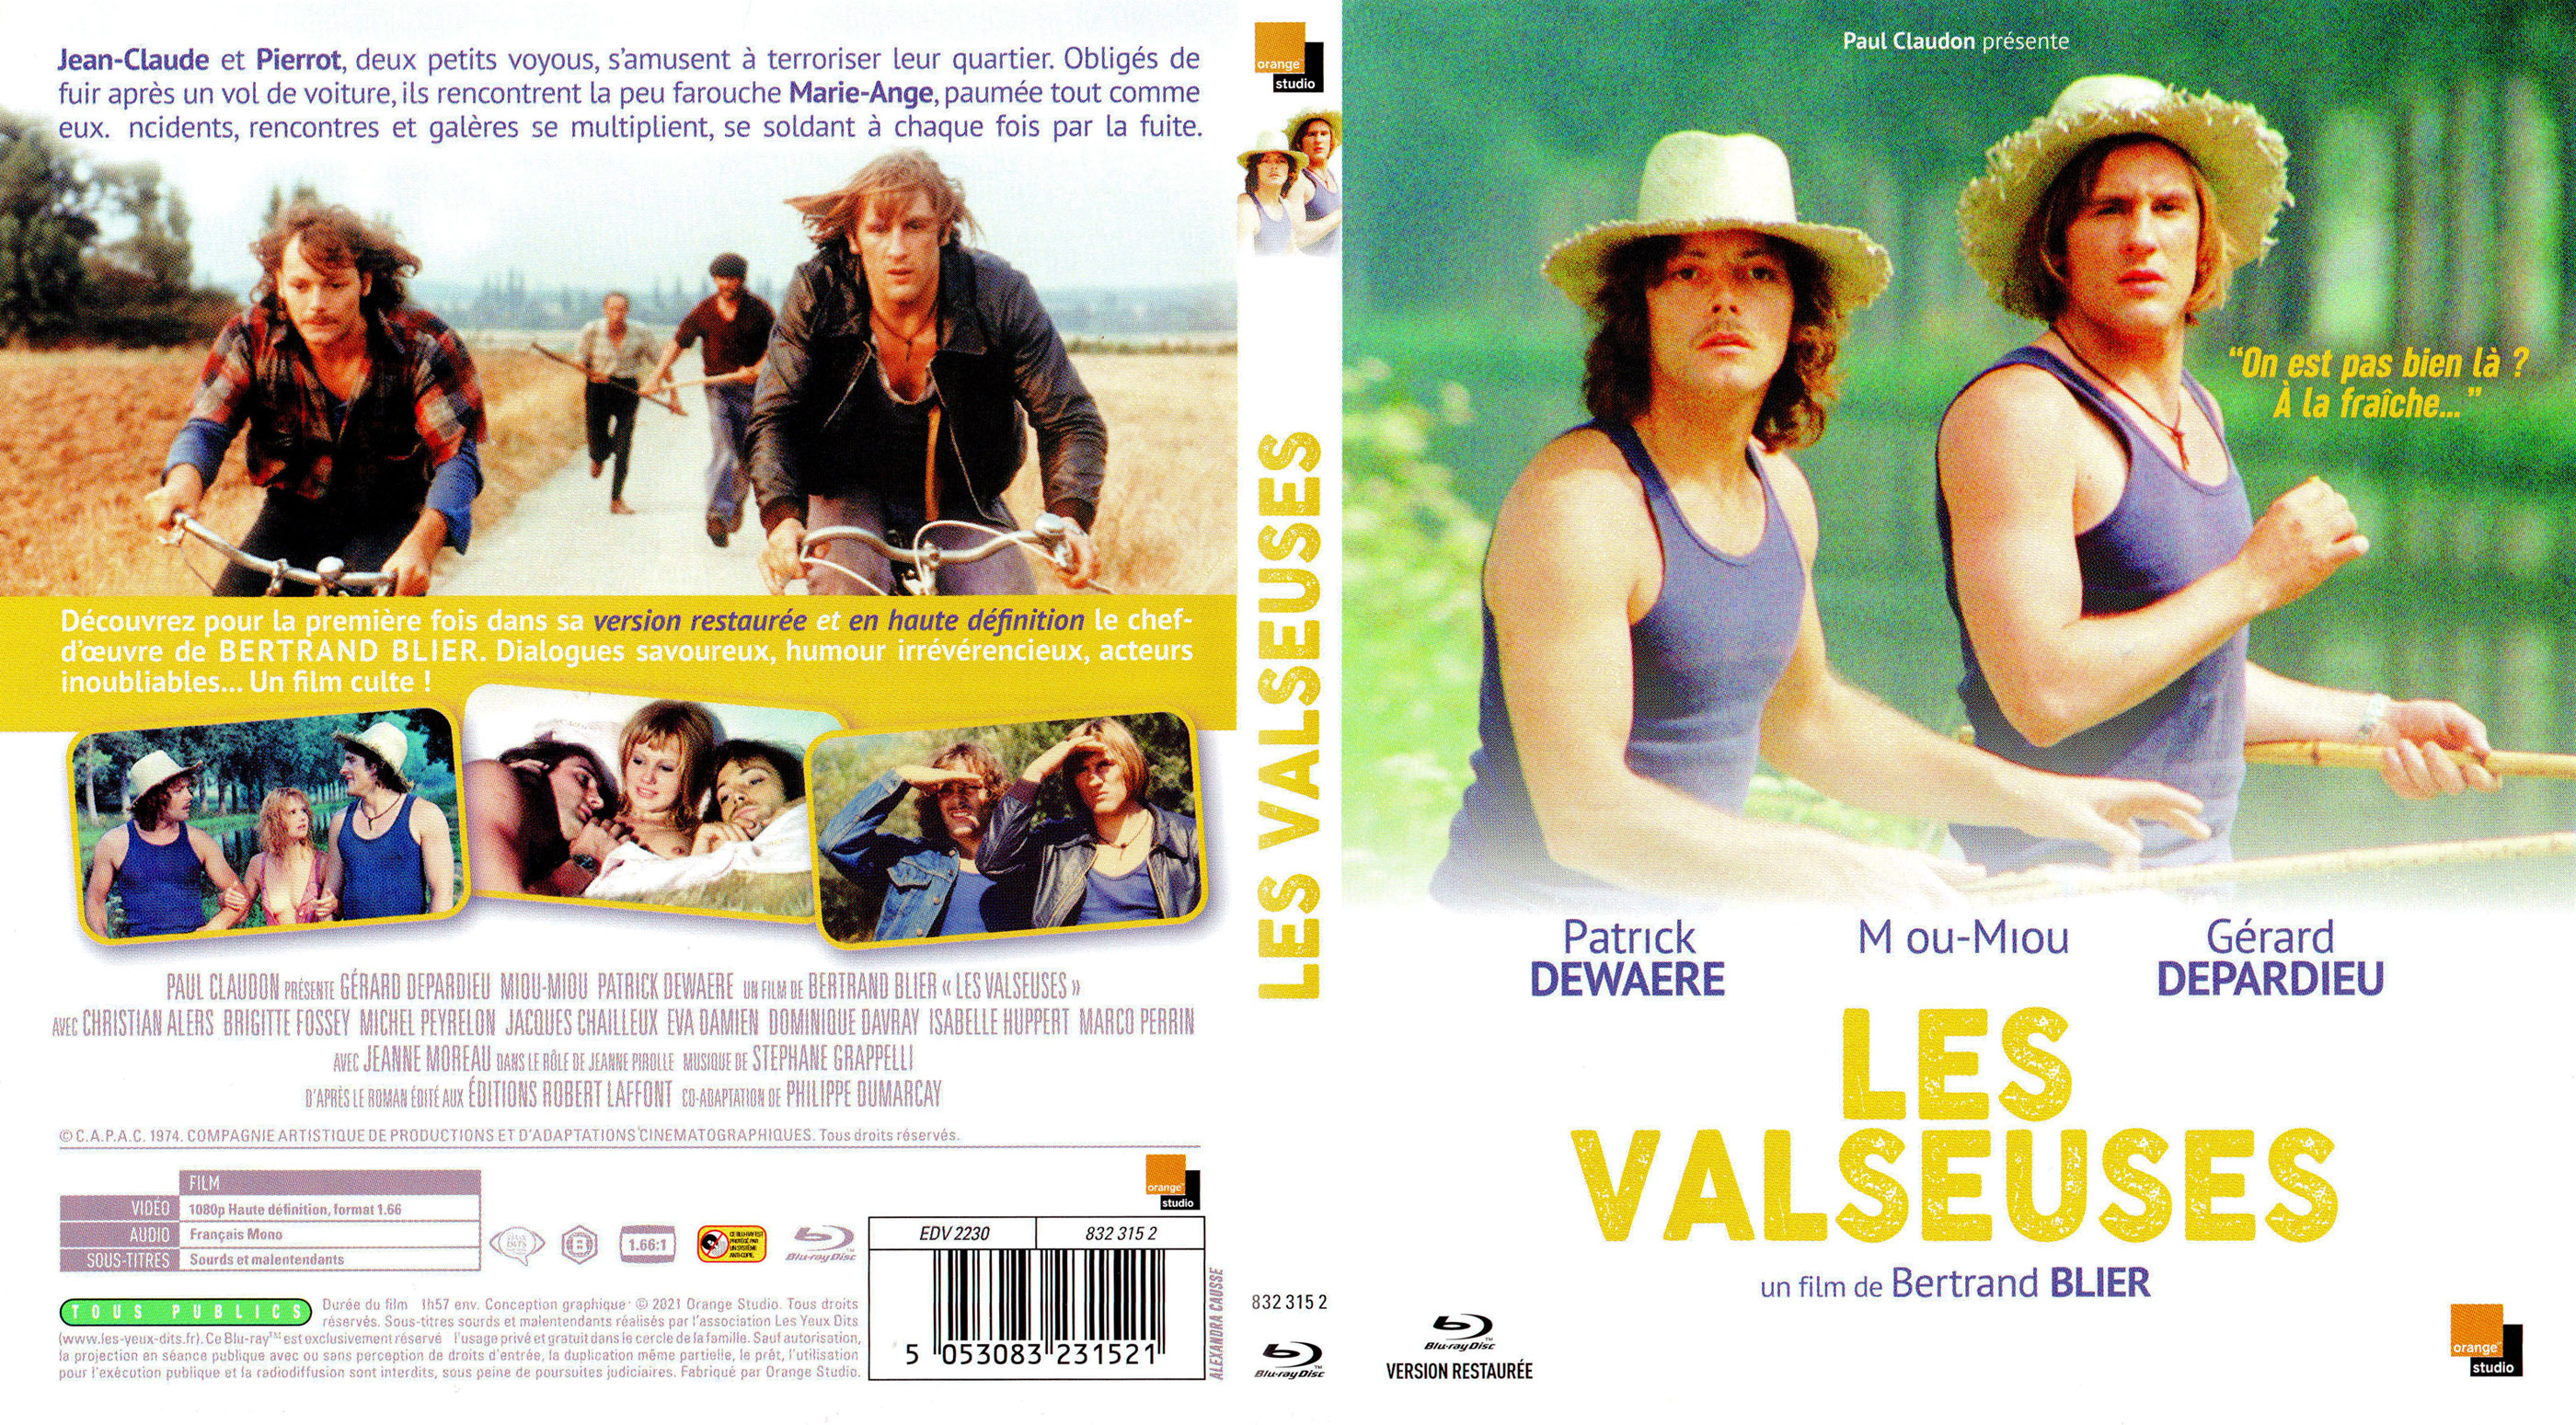 Jaquette DVD Les valseuses (BLU-RAY)